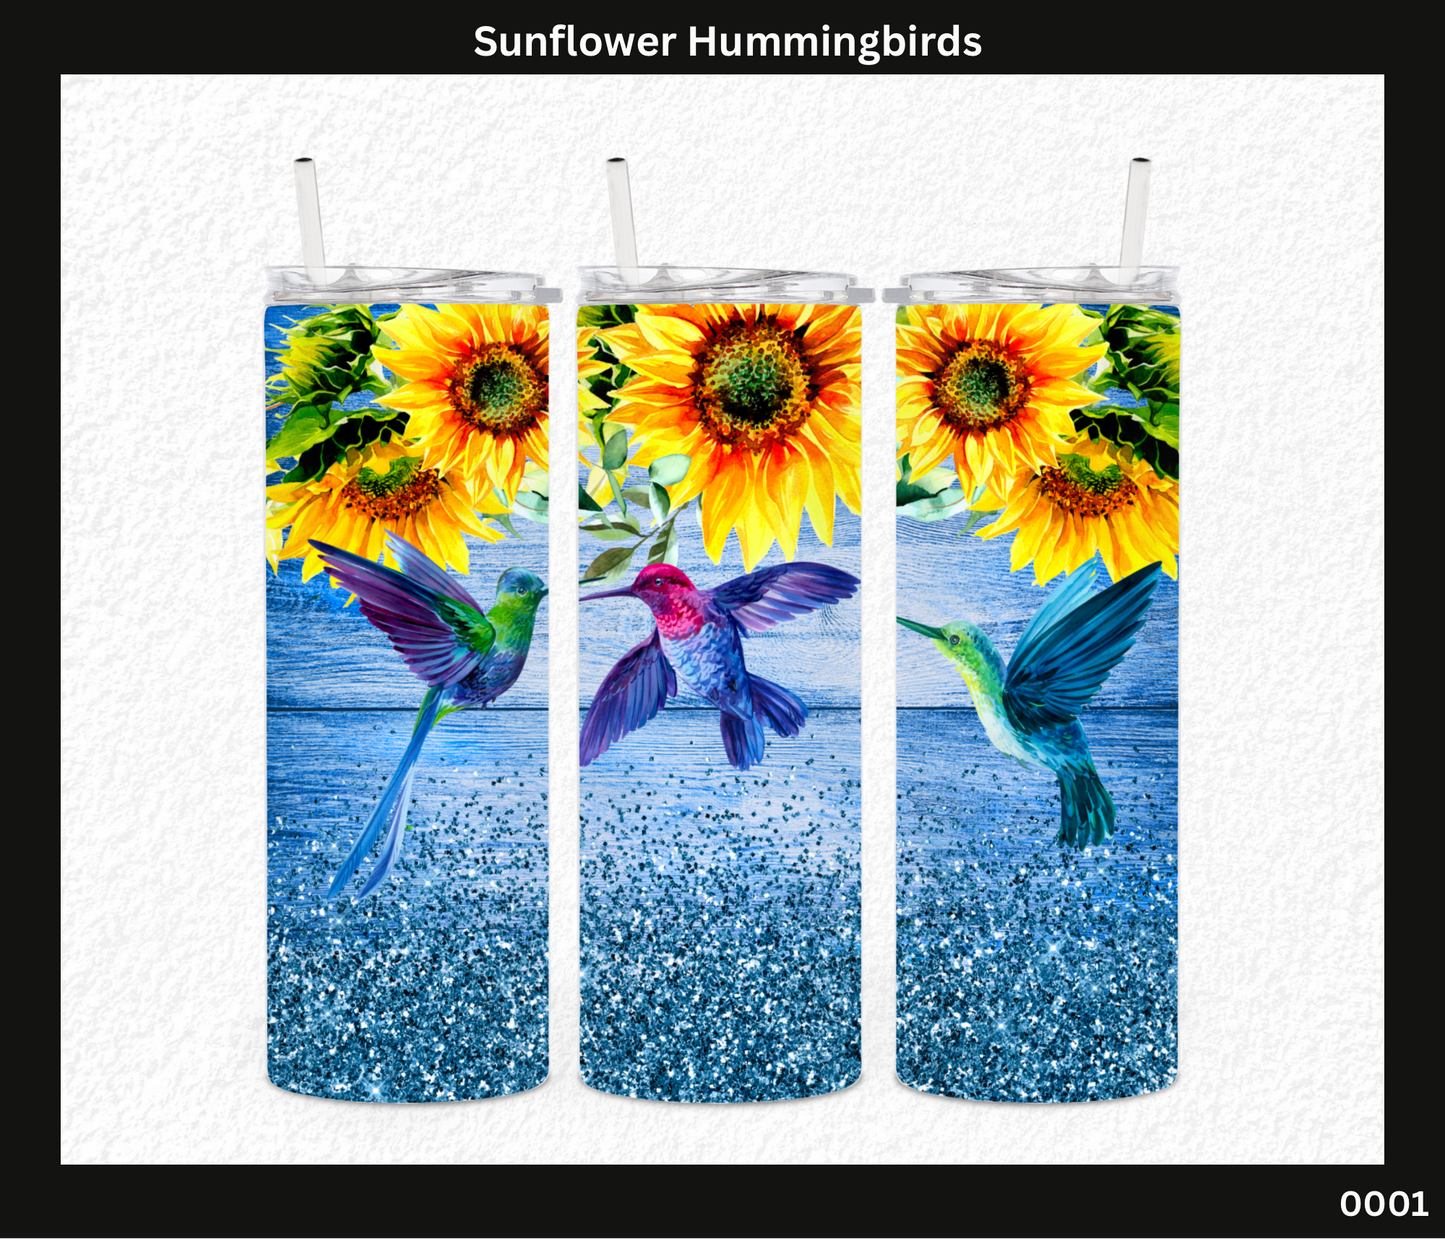 Sunflower Hummingbirds